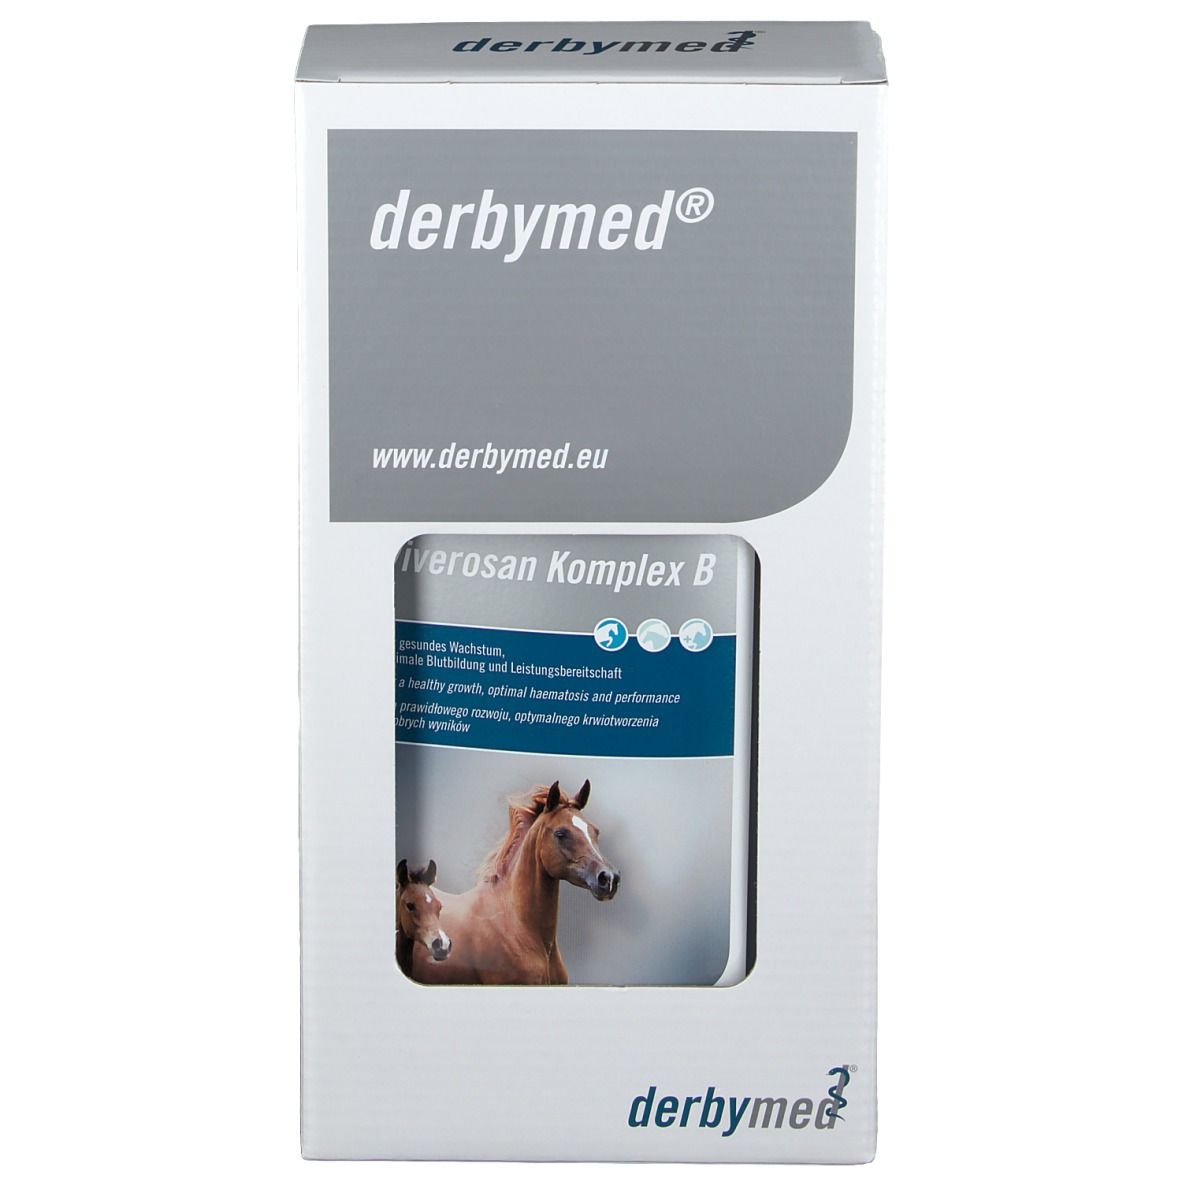 derbymed® Viverosan Komplex B